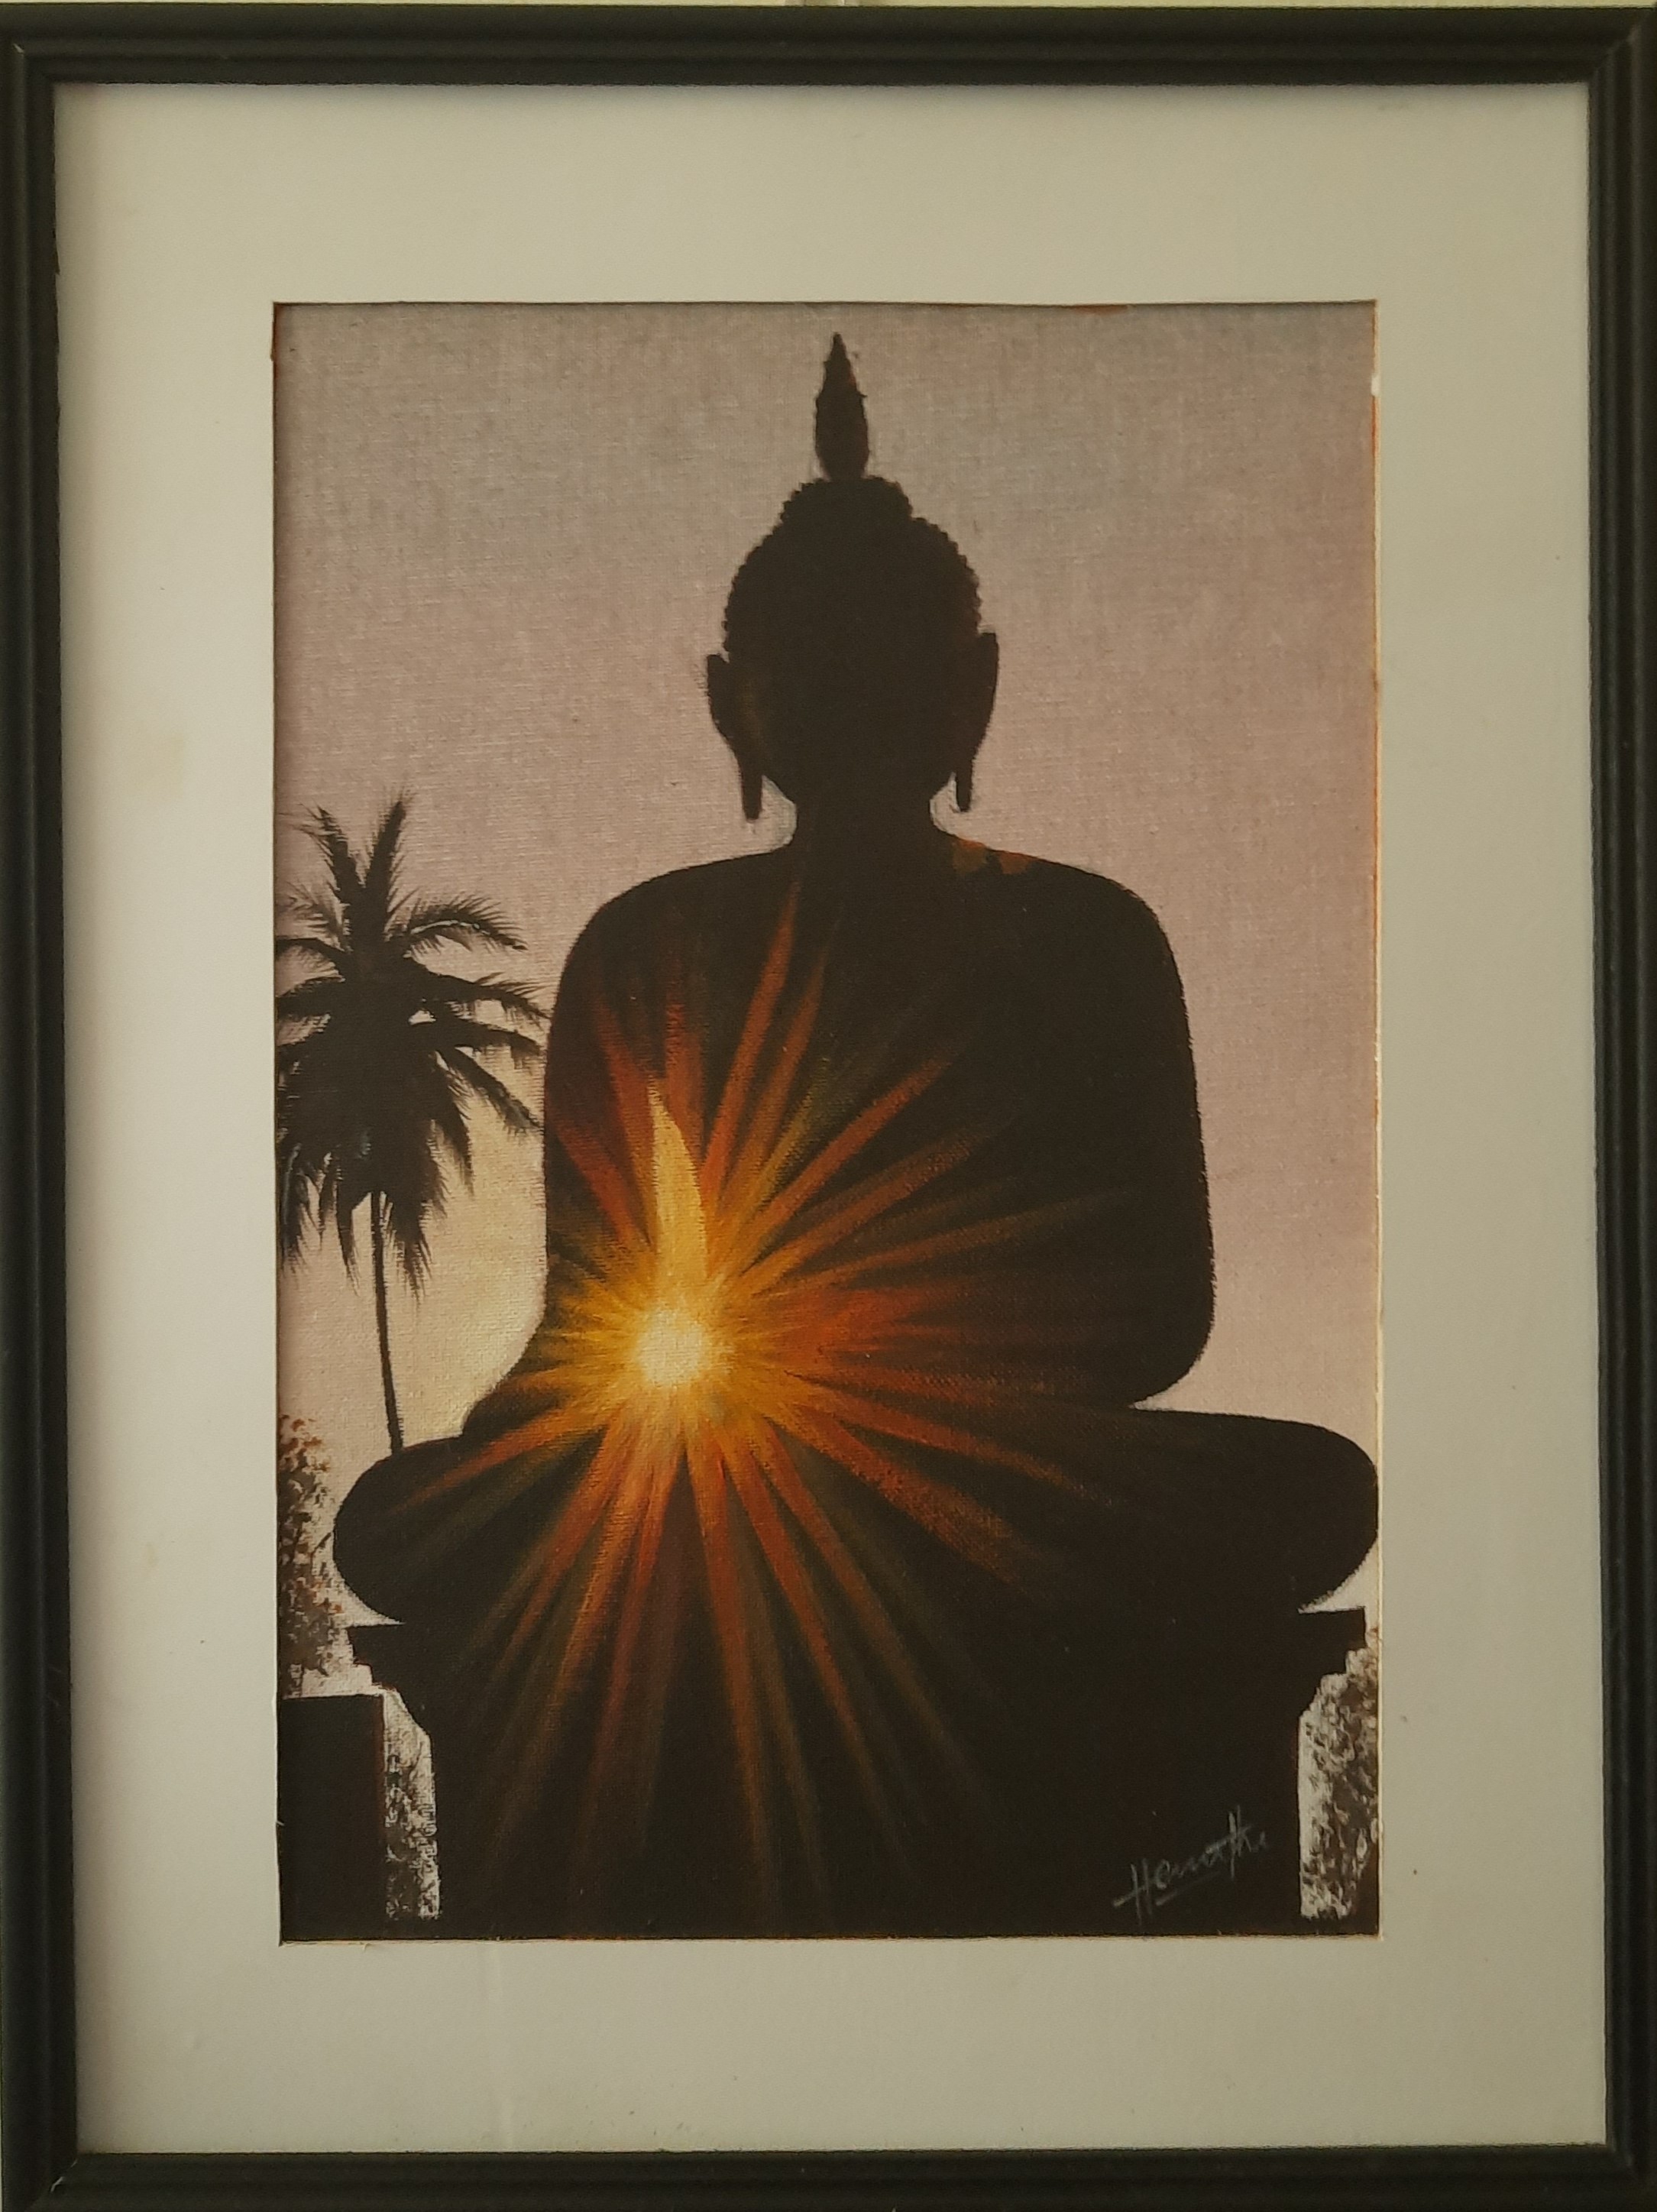 The Supreme Buddha by Hemantha Bogahawaththa